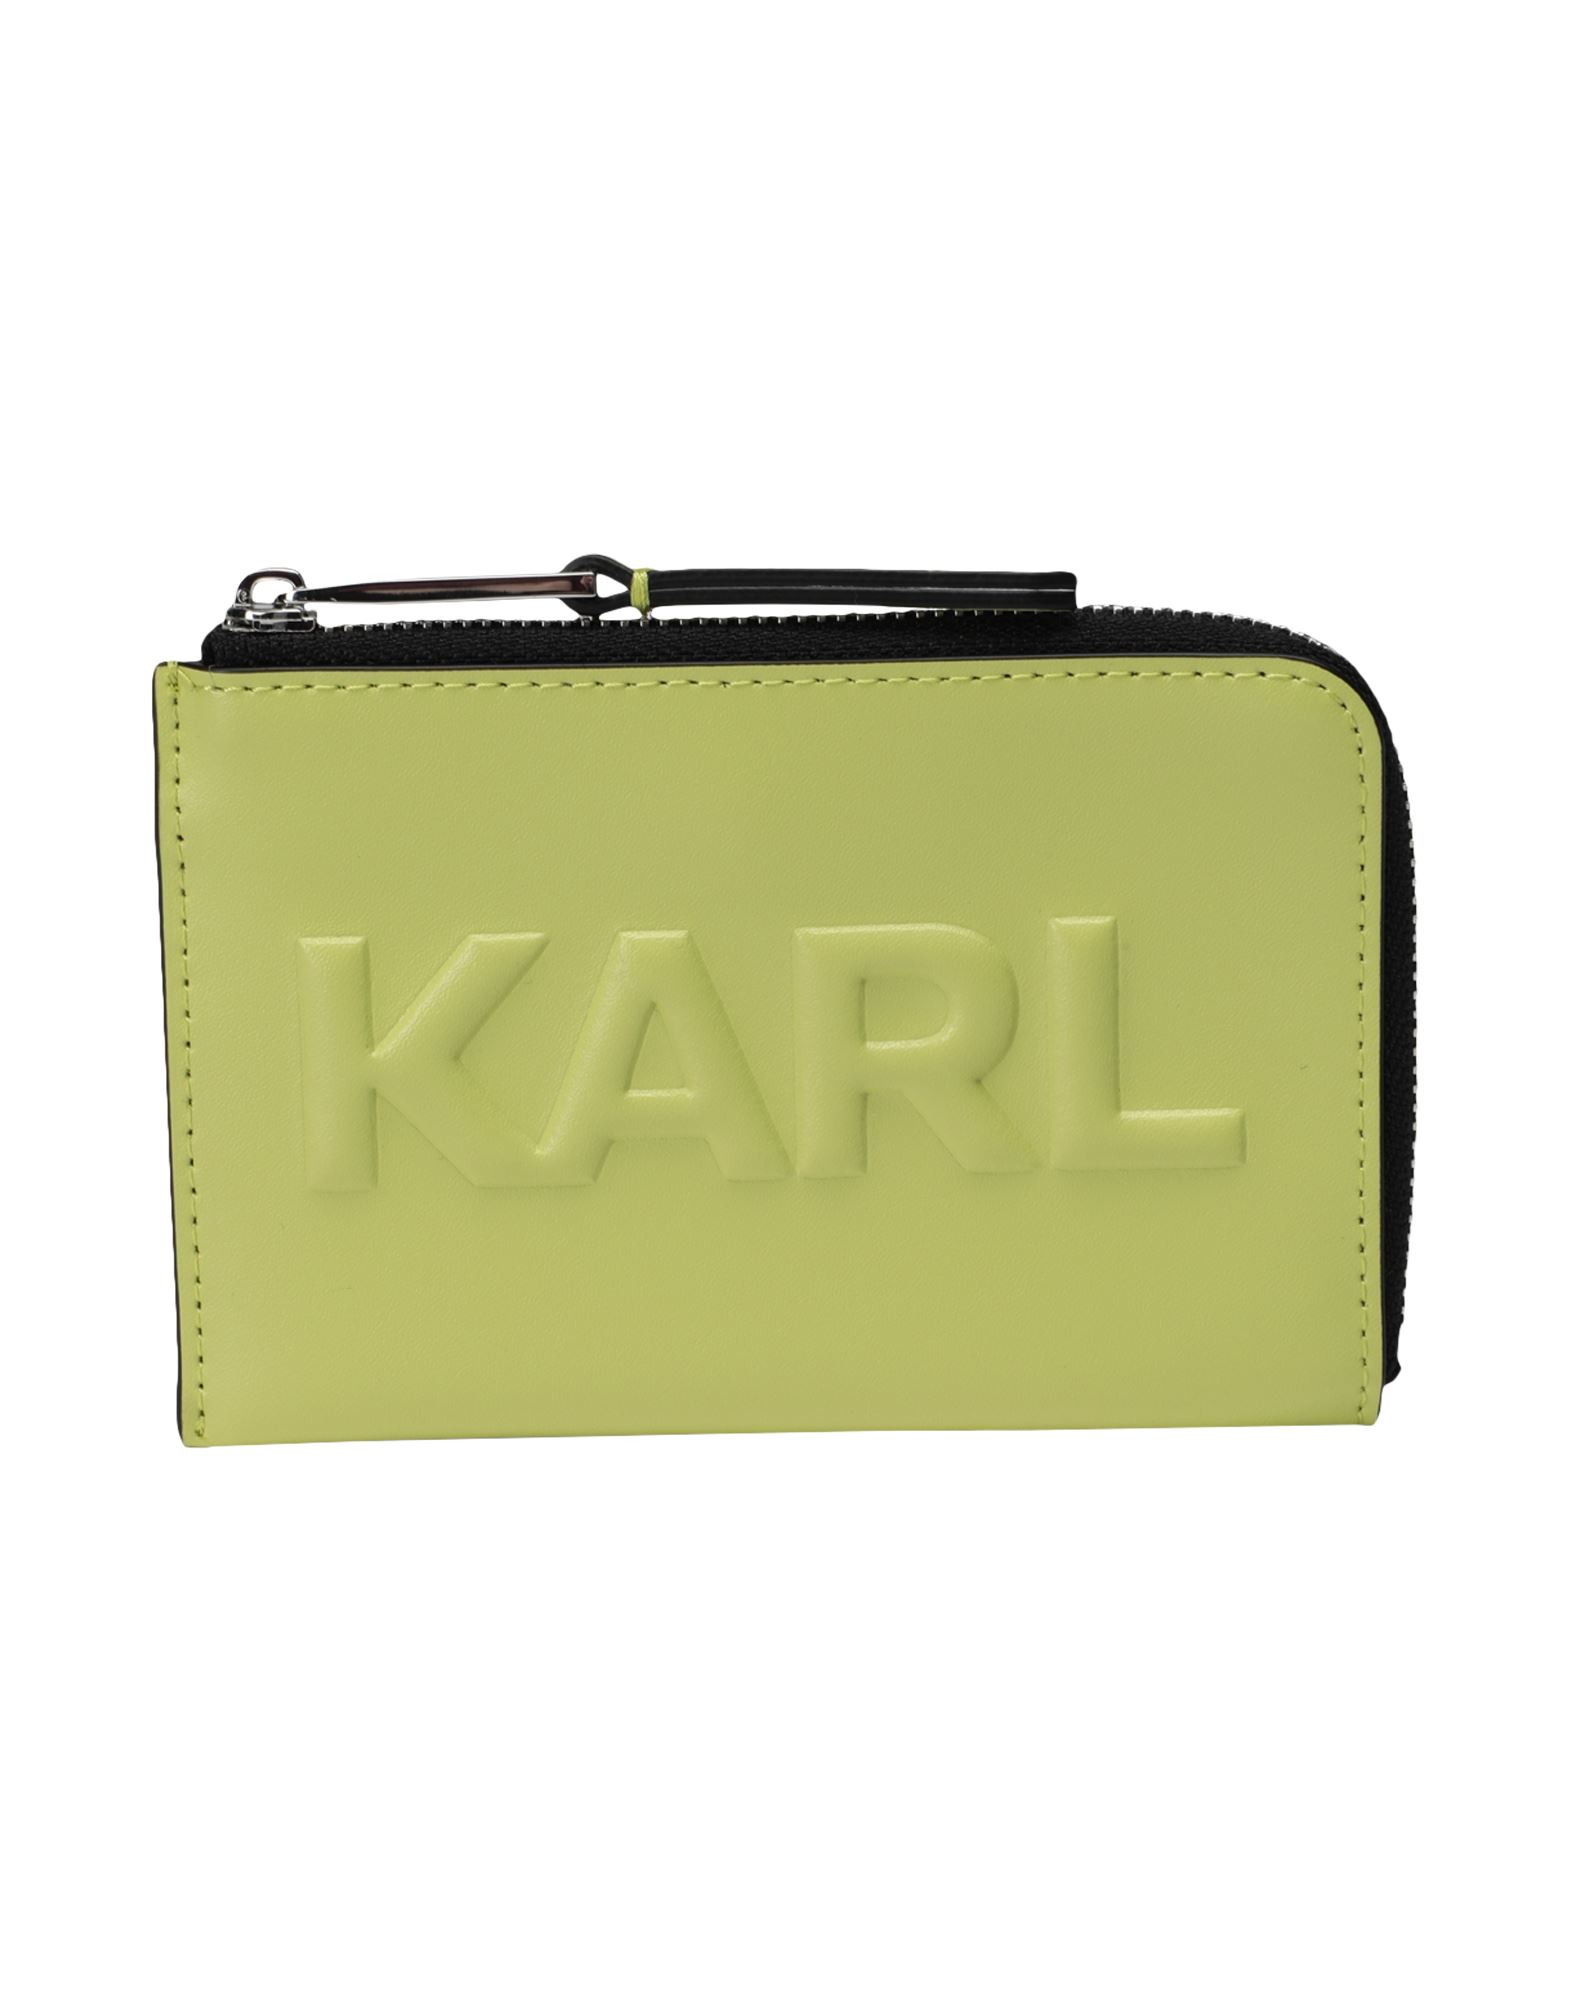 Karl Lagerfeld Document Holders In Green